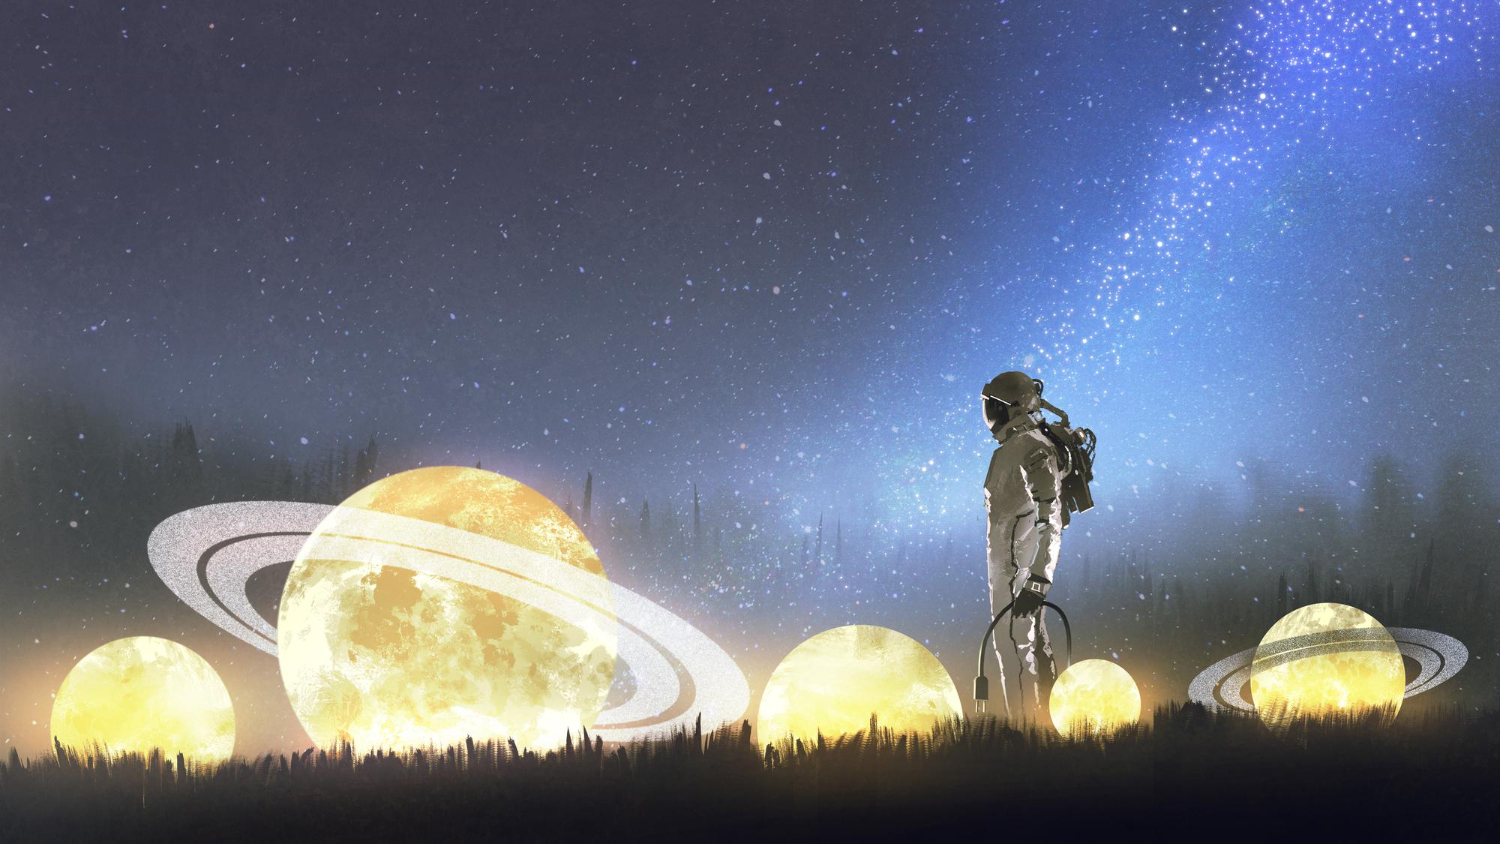 astronaut looking stars grass digital art style illustration painting